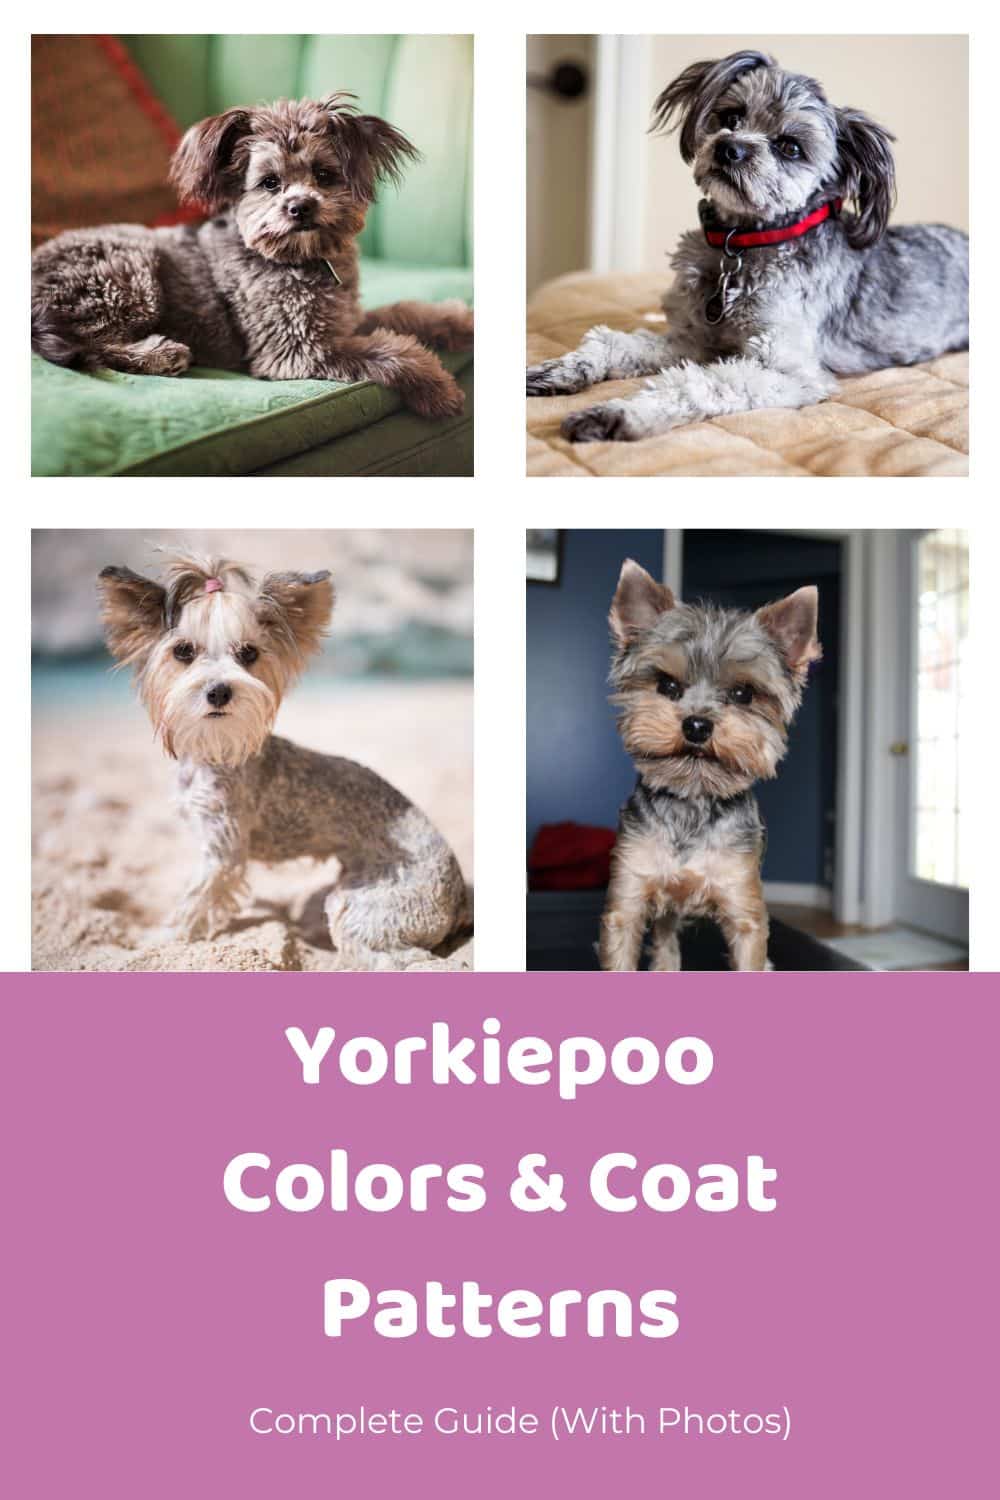 Yorkiepoo Colors & Coat Patterns